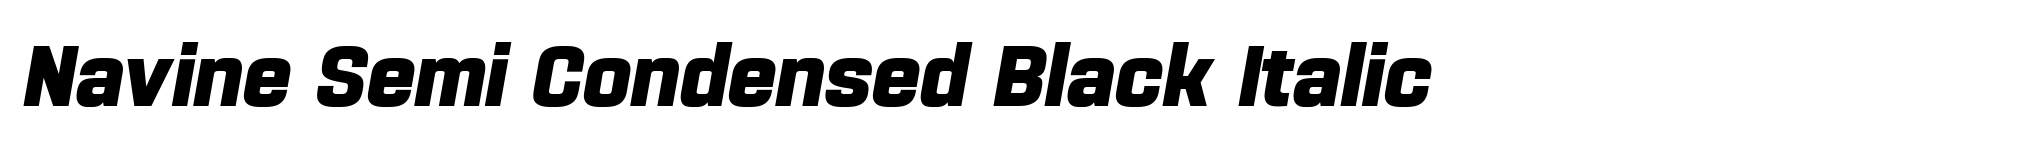 Navine Semi Condensed Black Italic image